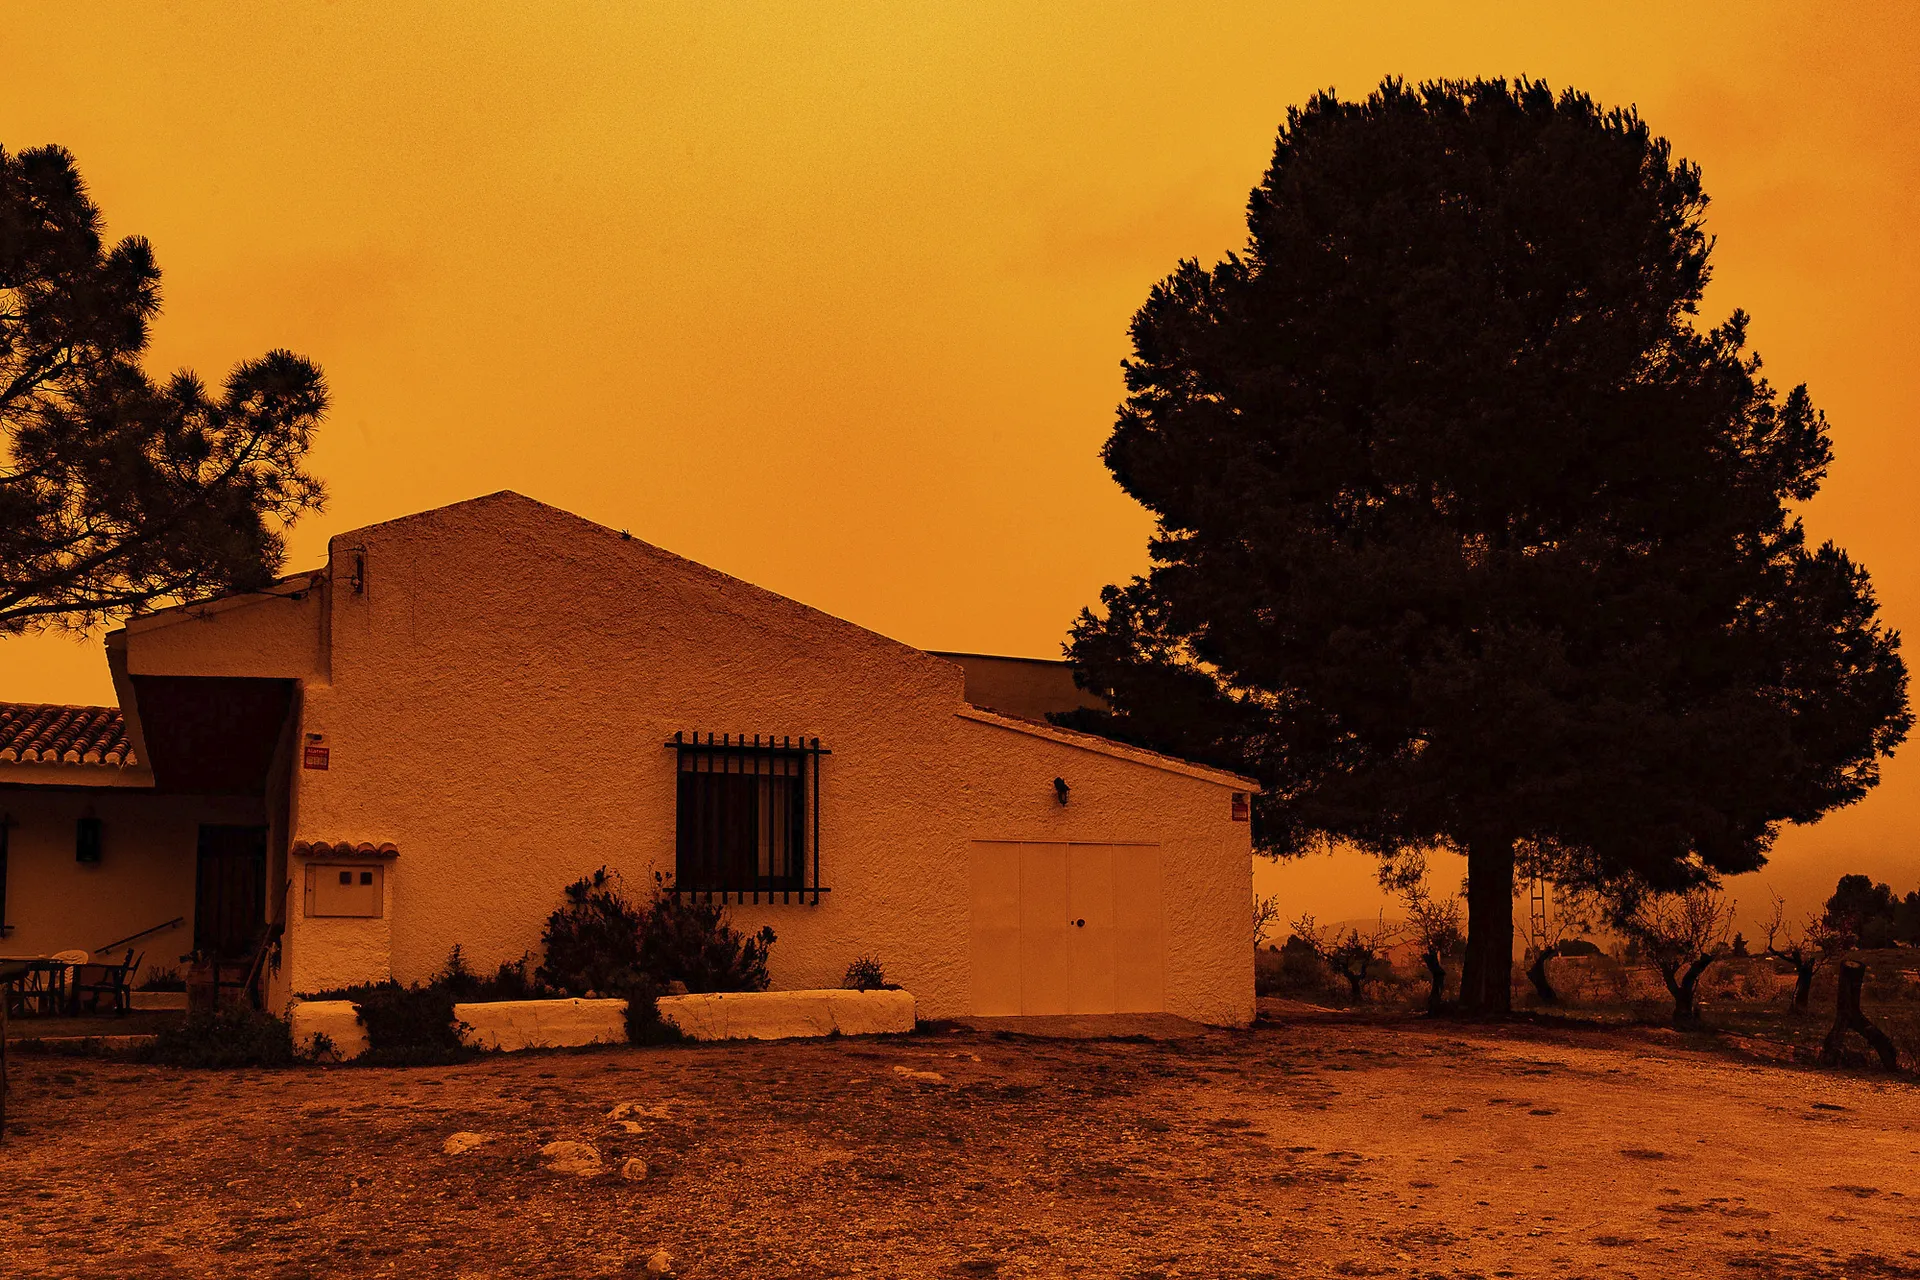 Desert Dust Cloud: A sandstorm covers part of Spain in orange